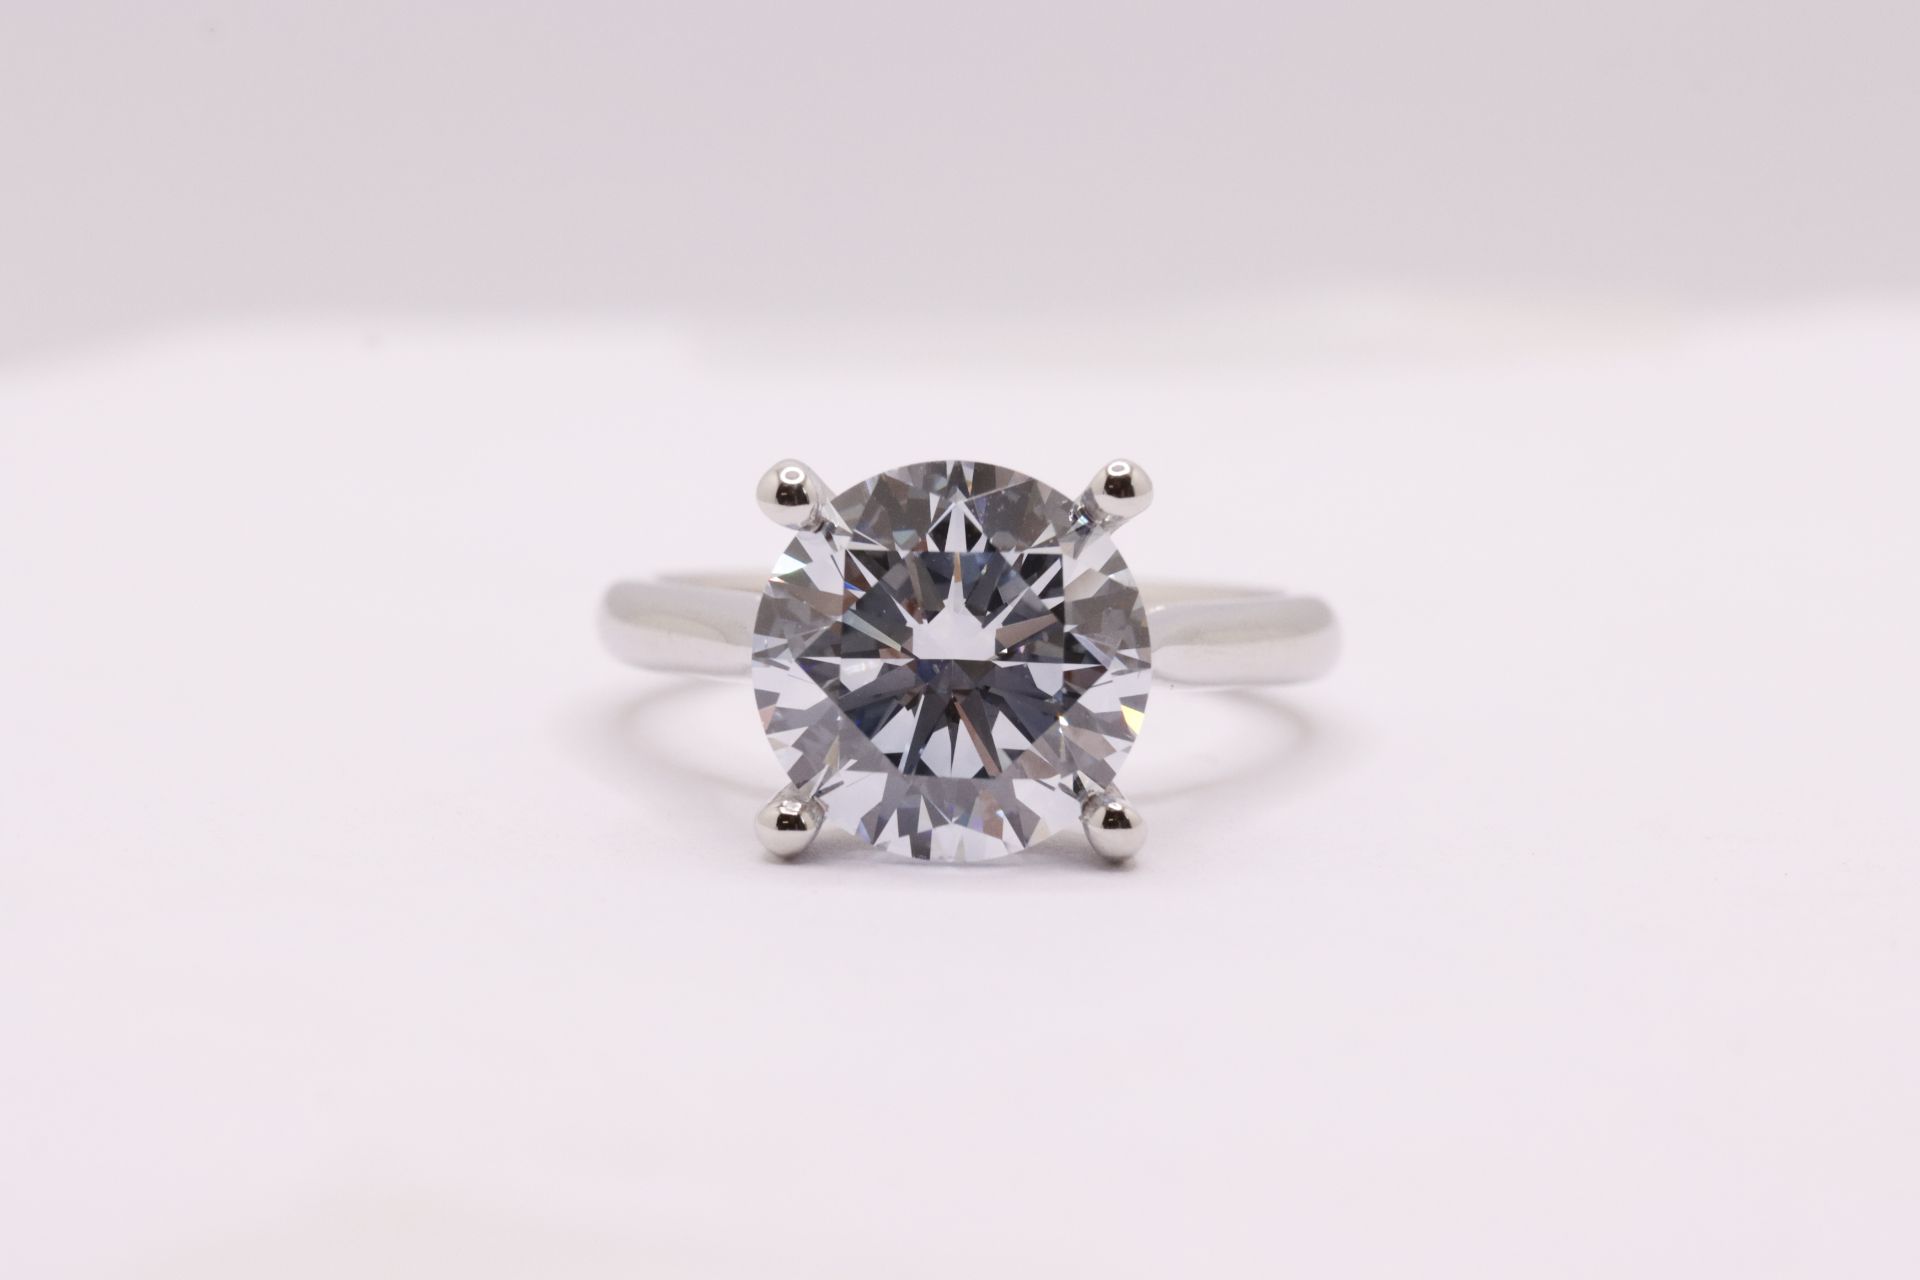 ** ON SALE **Round Brilliant Cut Diamond 4.04 Carat Fancy Blue Colour VVS2 Clarity Platinum Ring - Image 4 of 14